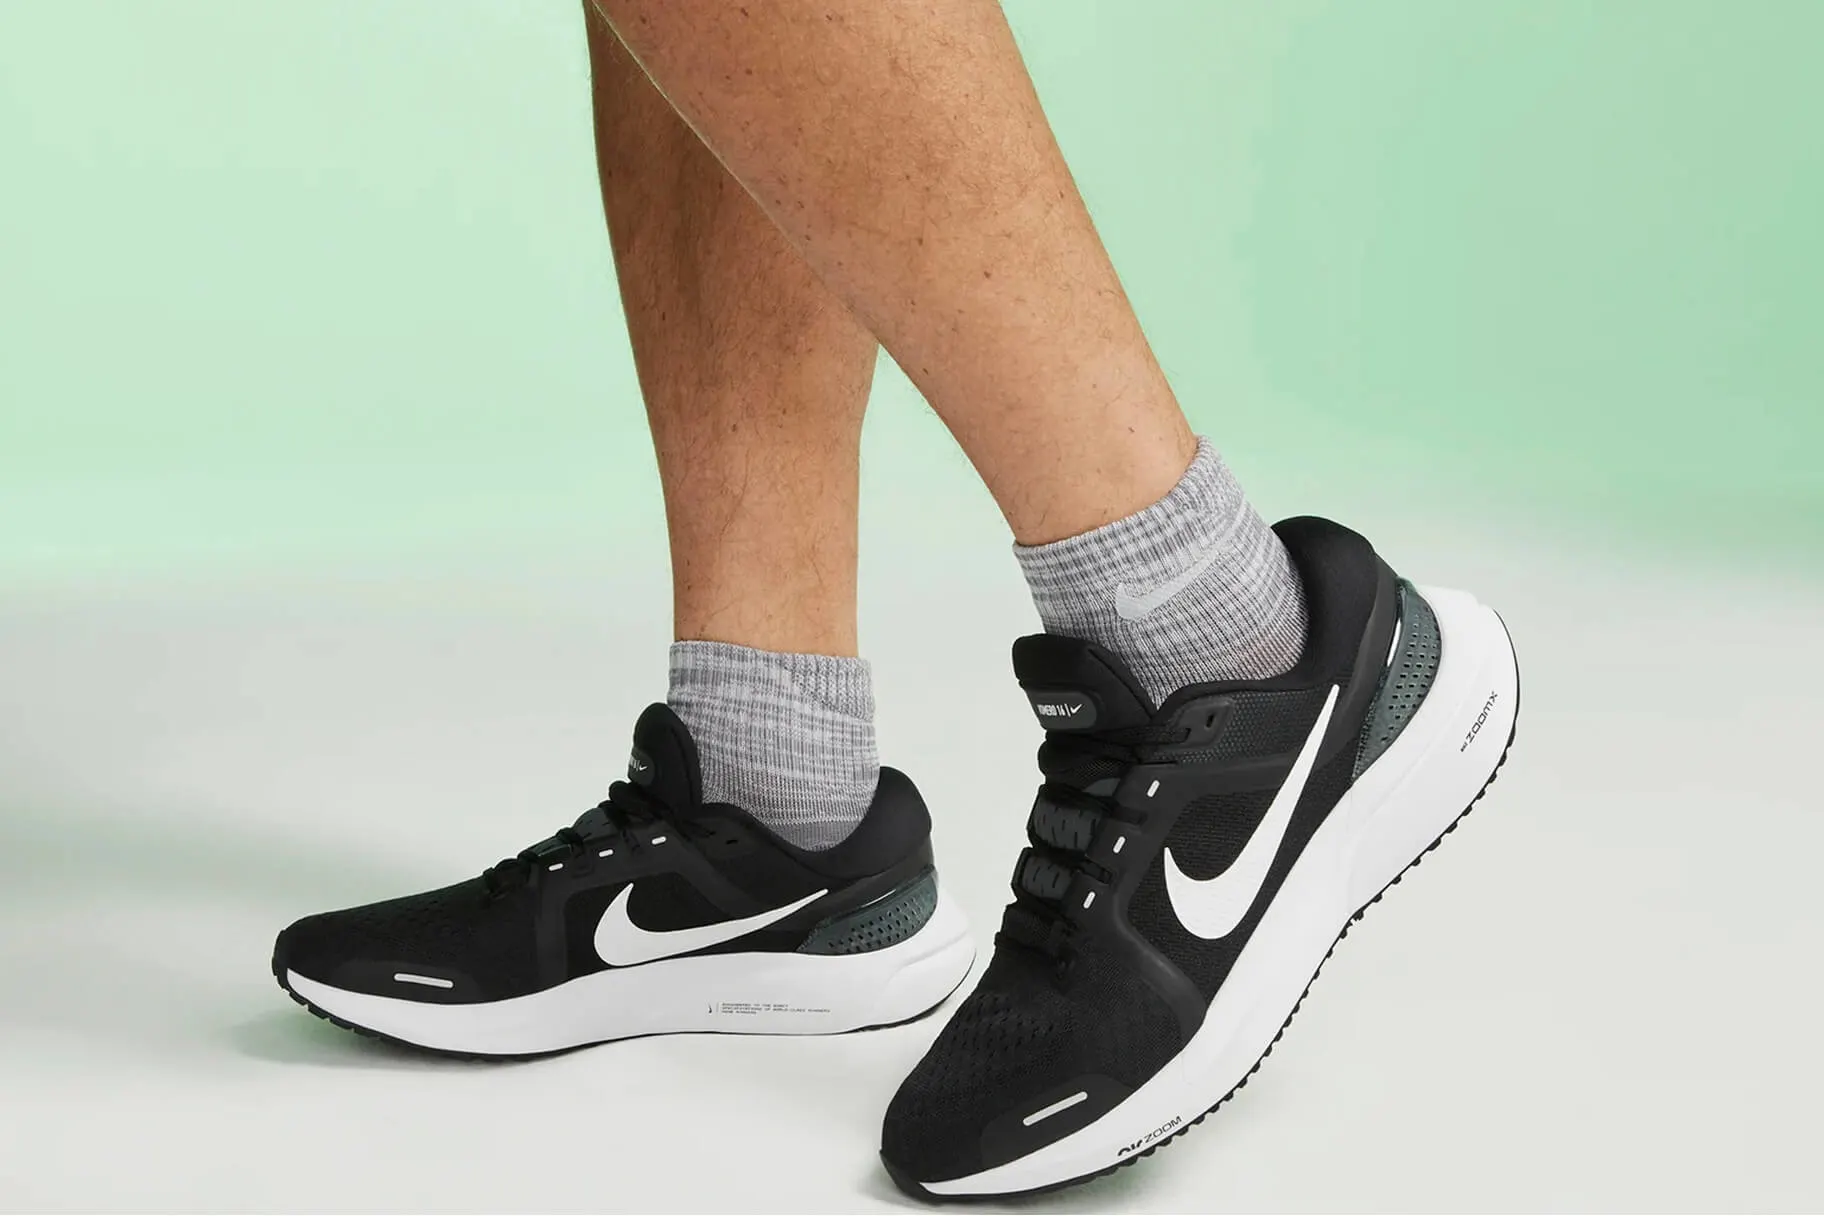 Best Nike Walking Shoes 2020 - Top 